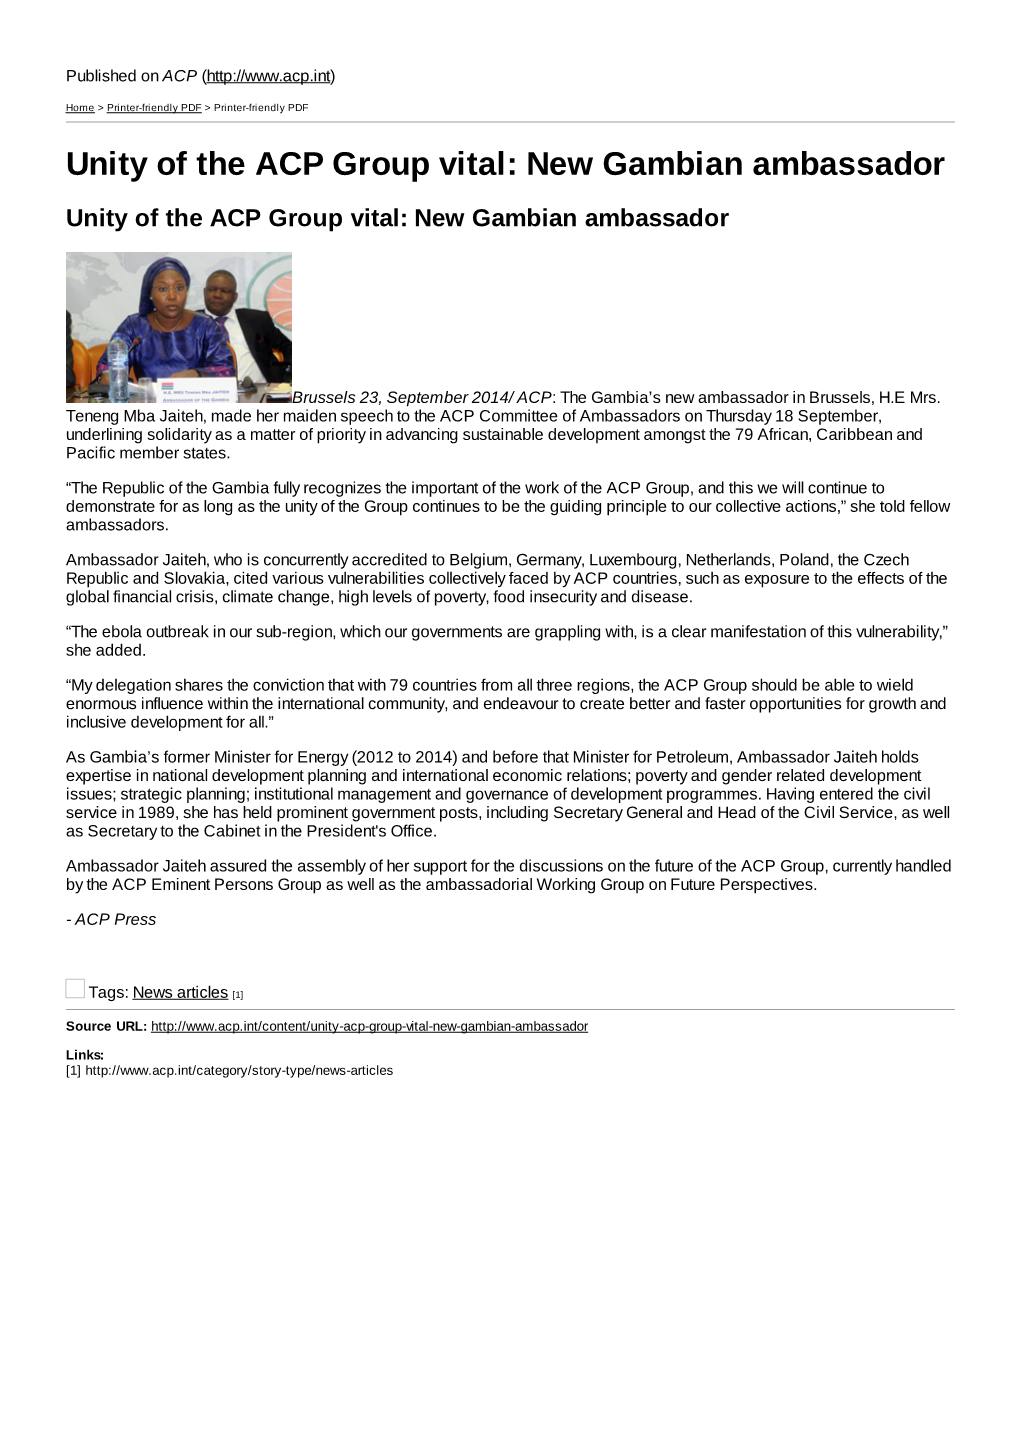 Unity of the ACP Group Vital: New Gambian Ambassador